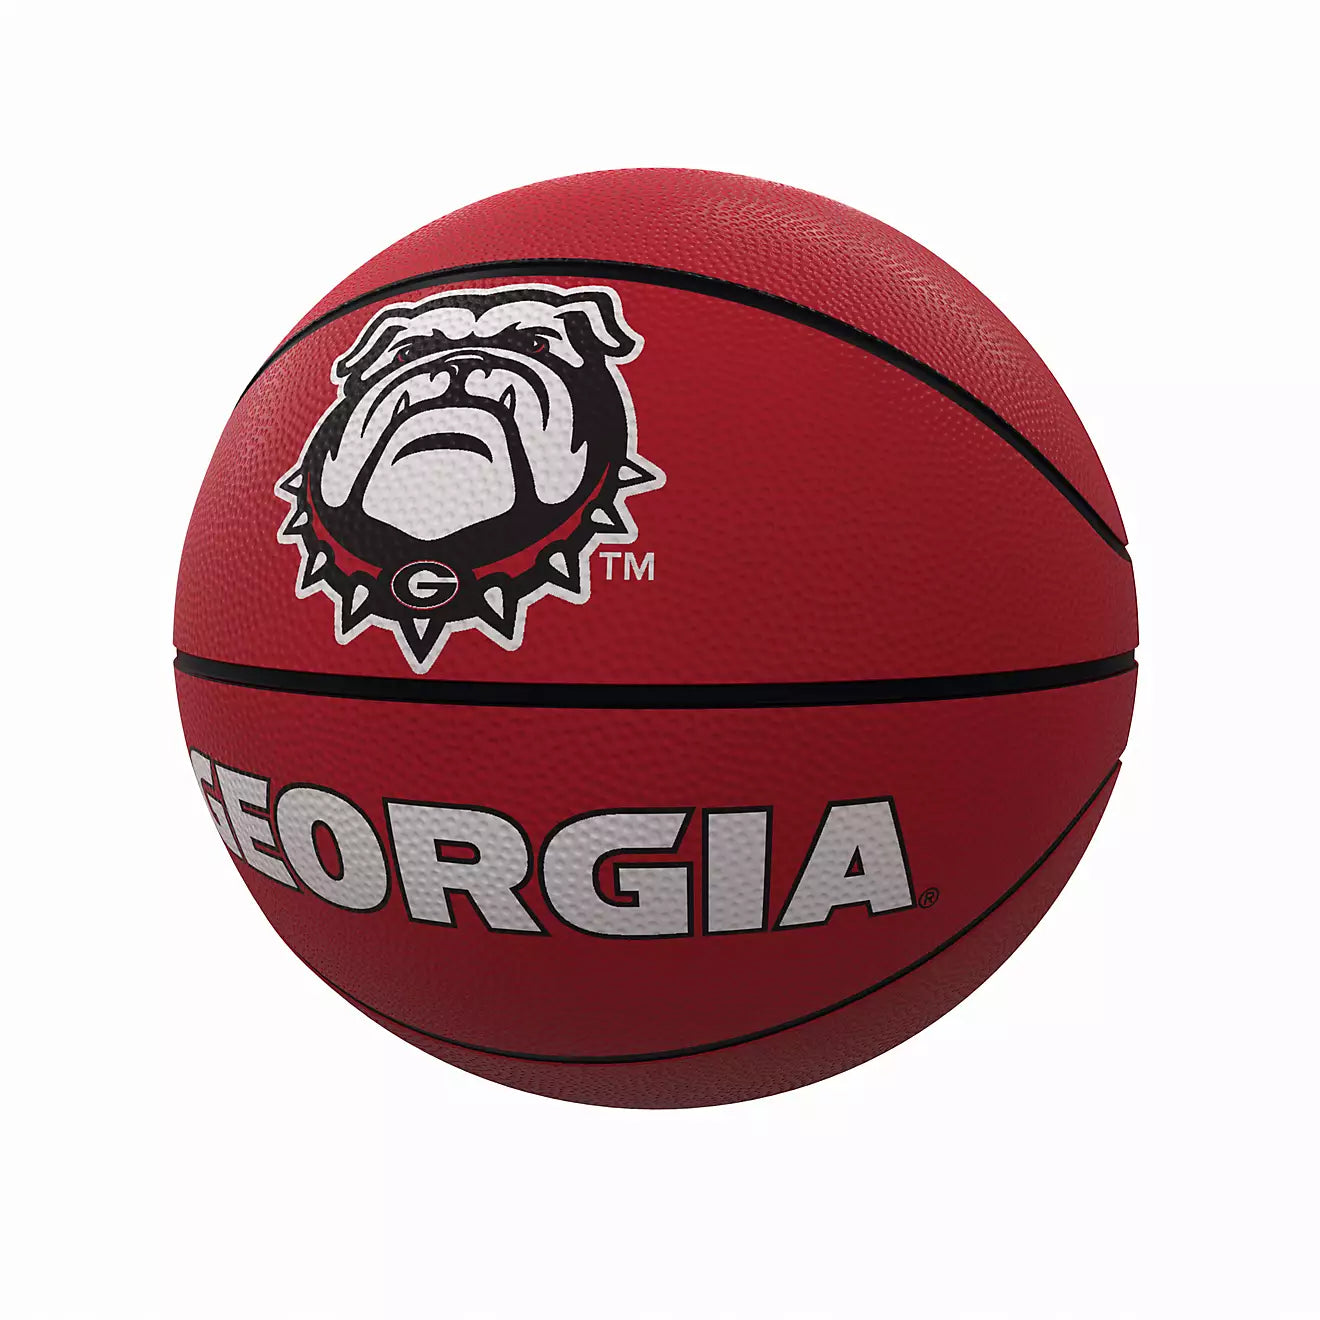 Georgia Mascot Official-Size Rubber Basketball